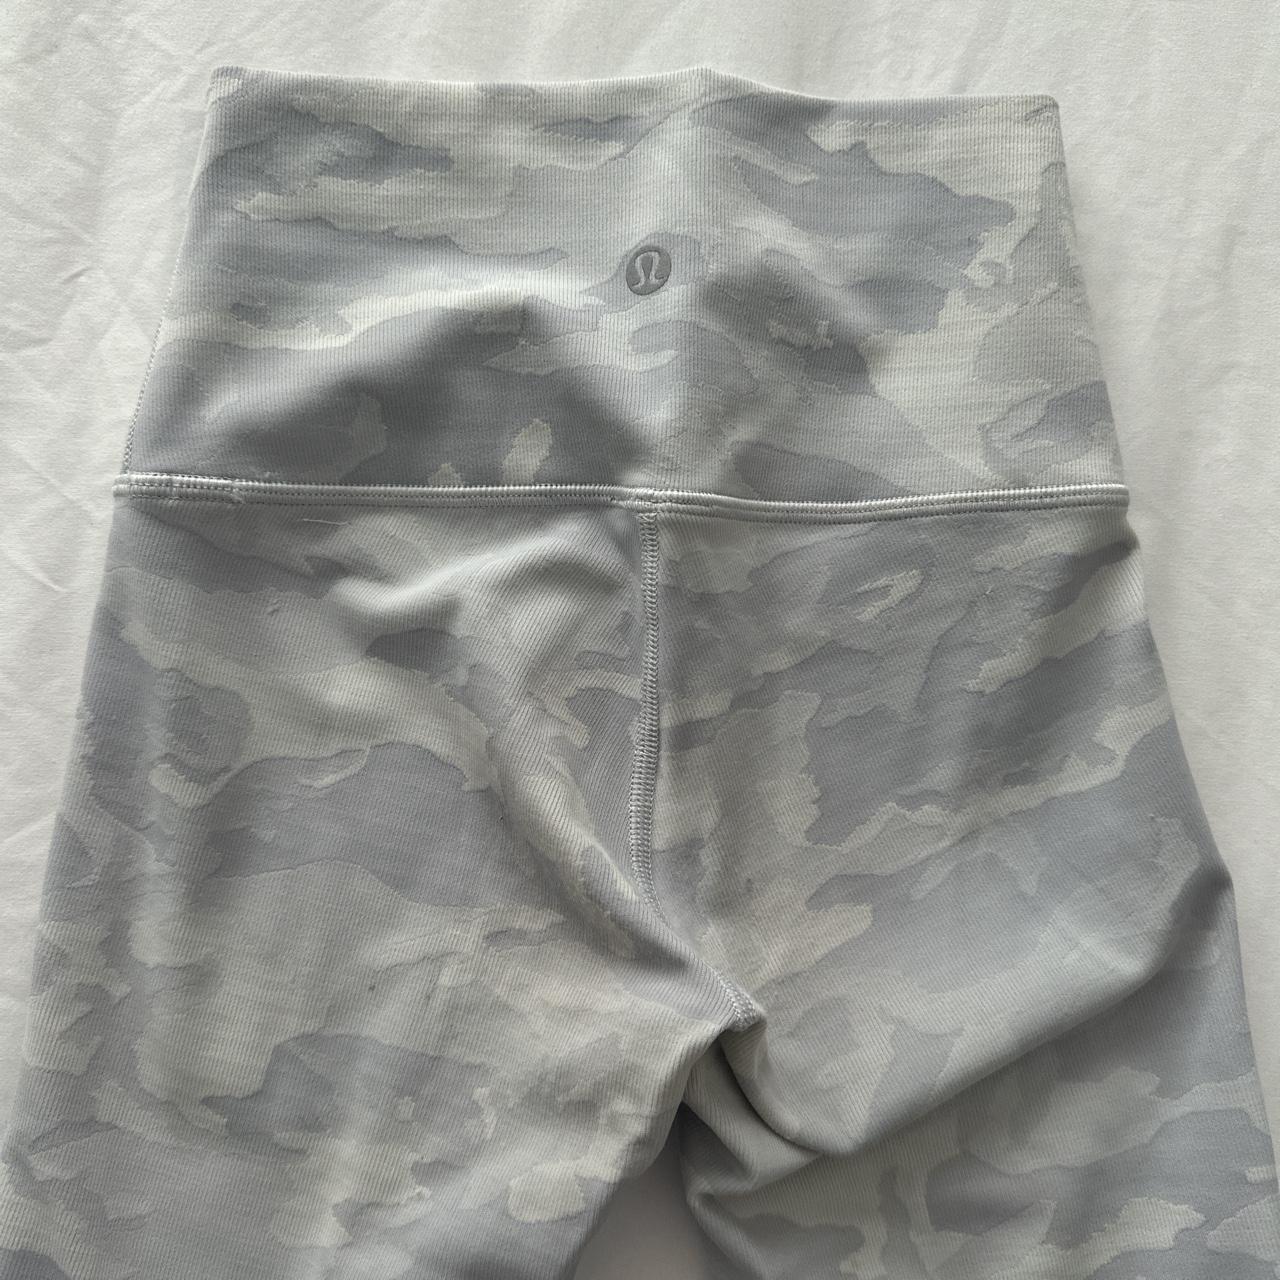 Lululemon white and grey camo leggings. The tag on - Depop